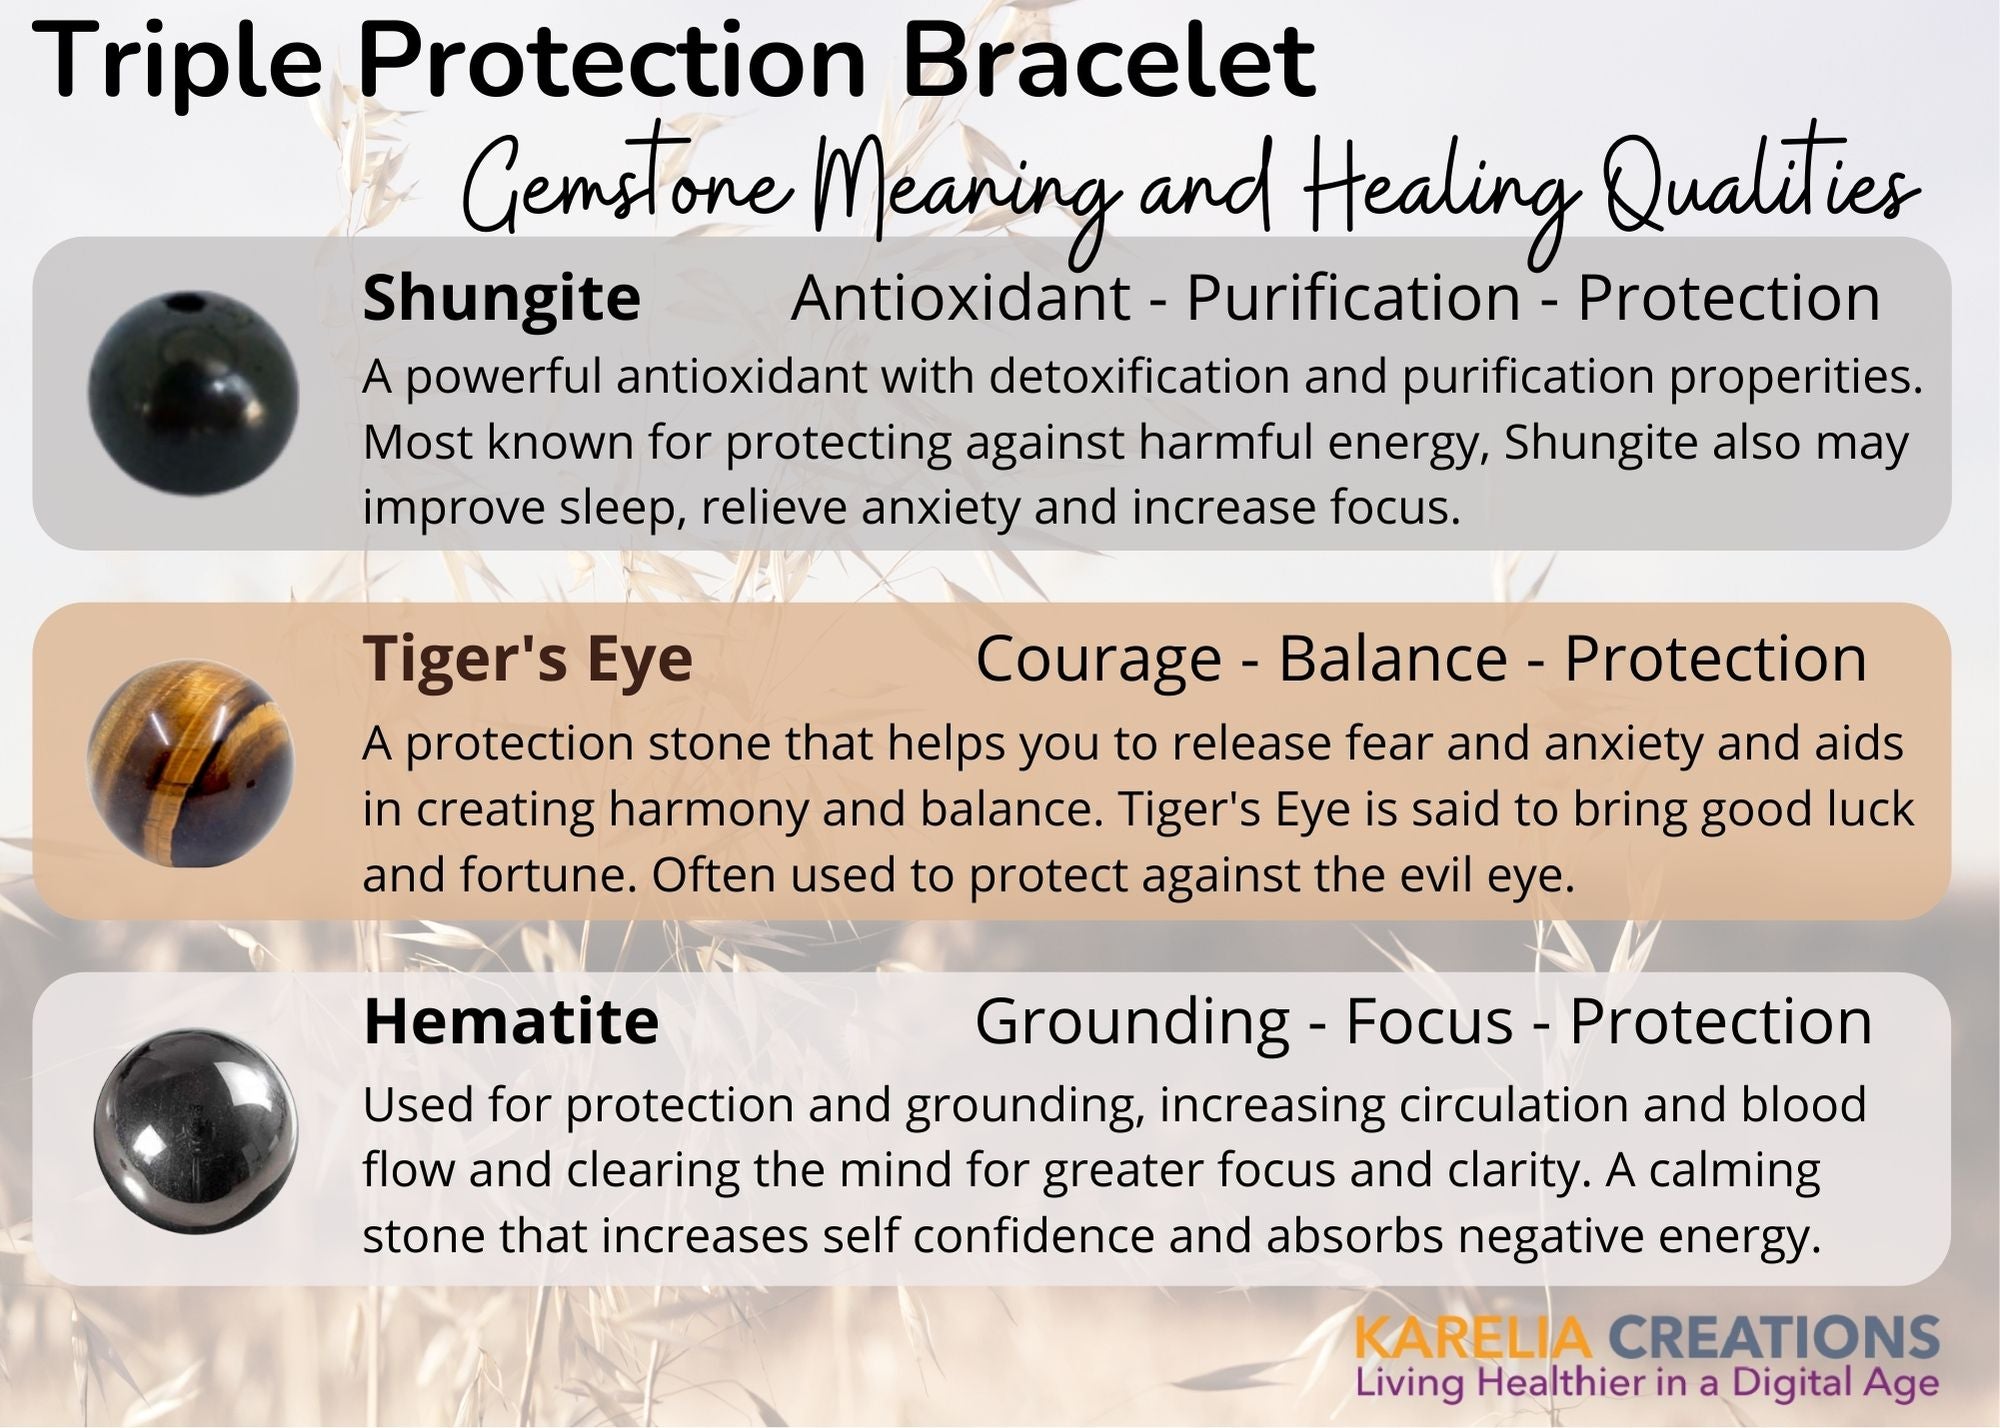 Kid's Triple Protection Bracelet - Shungite Hematite Tigers Eye